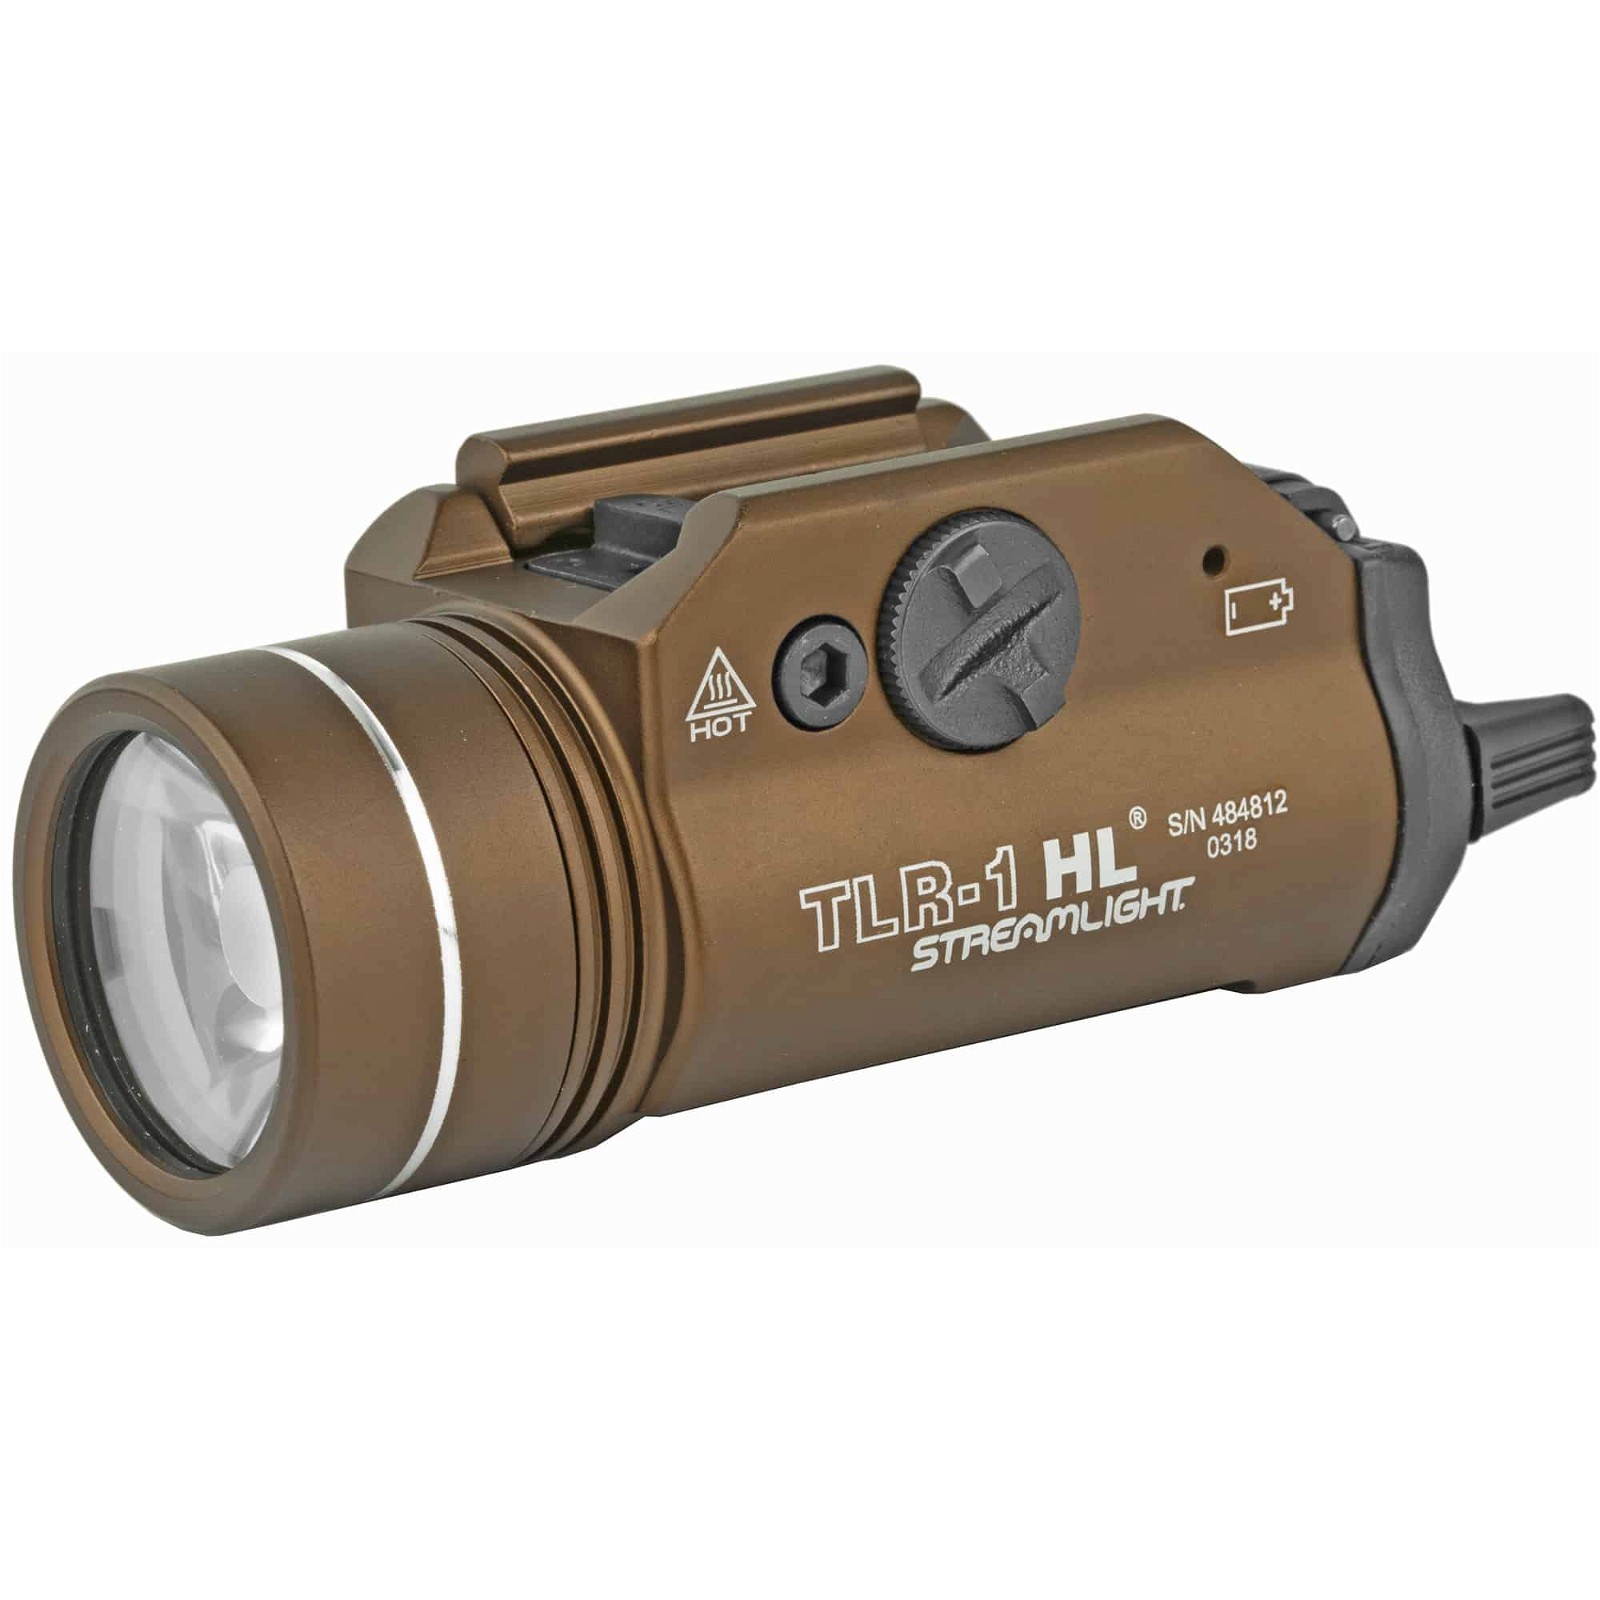 Streamlight TLR-1 HL Tactical Light - 1000 Lumen with Strobe